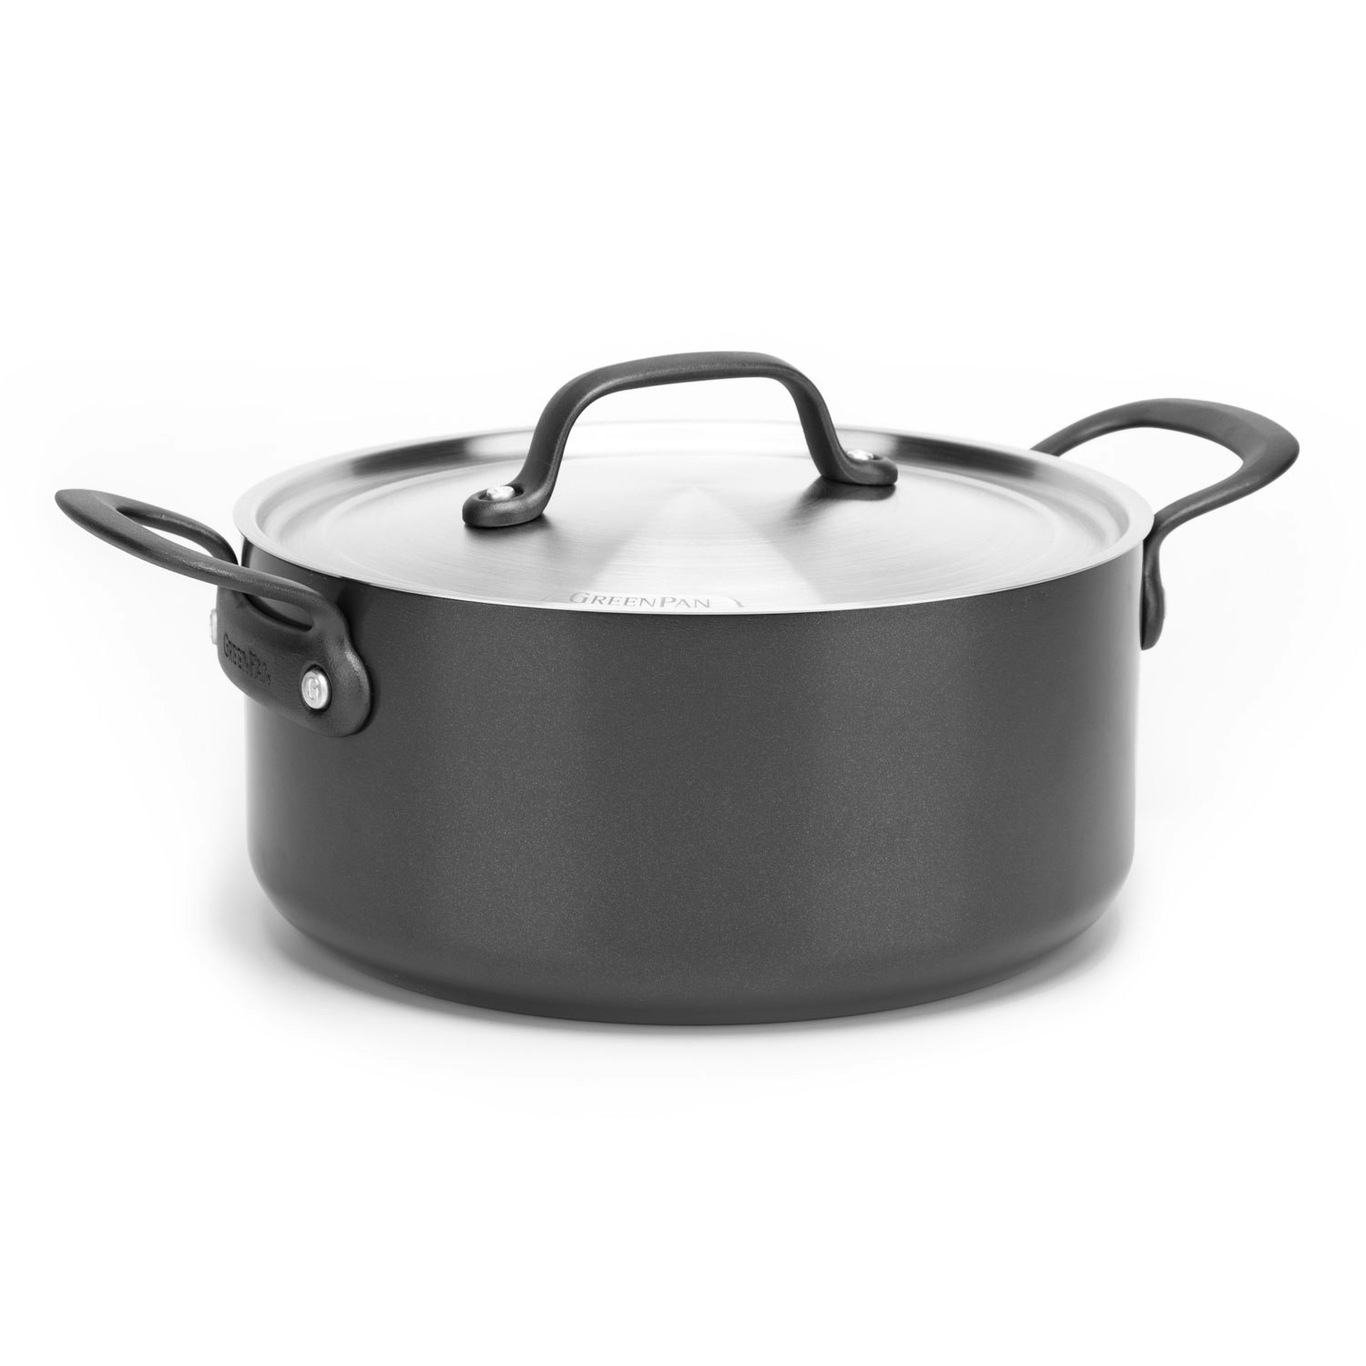 https://royaldesign.com/image/2/greenpan-craft-casserole-with-lid-24-cm-49-l-0?w=800&quality=80